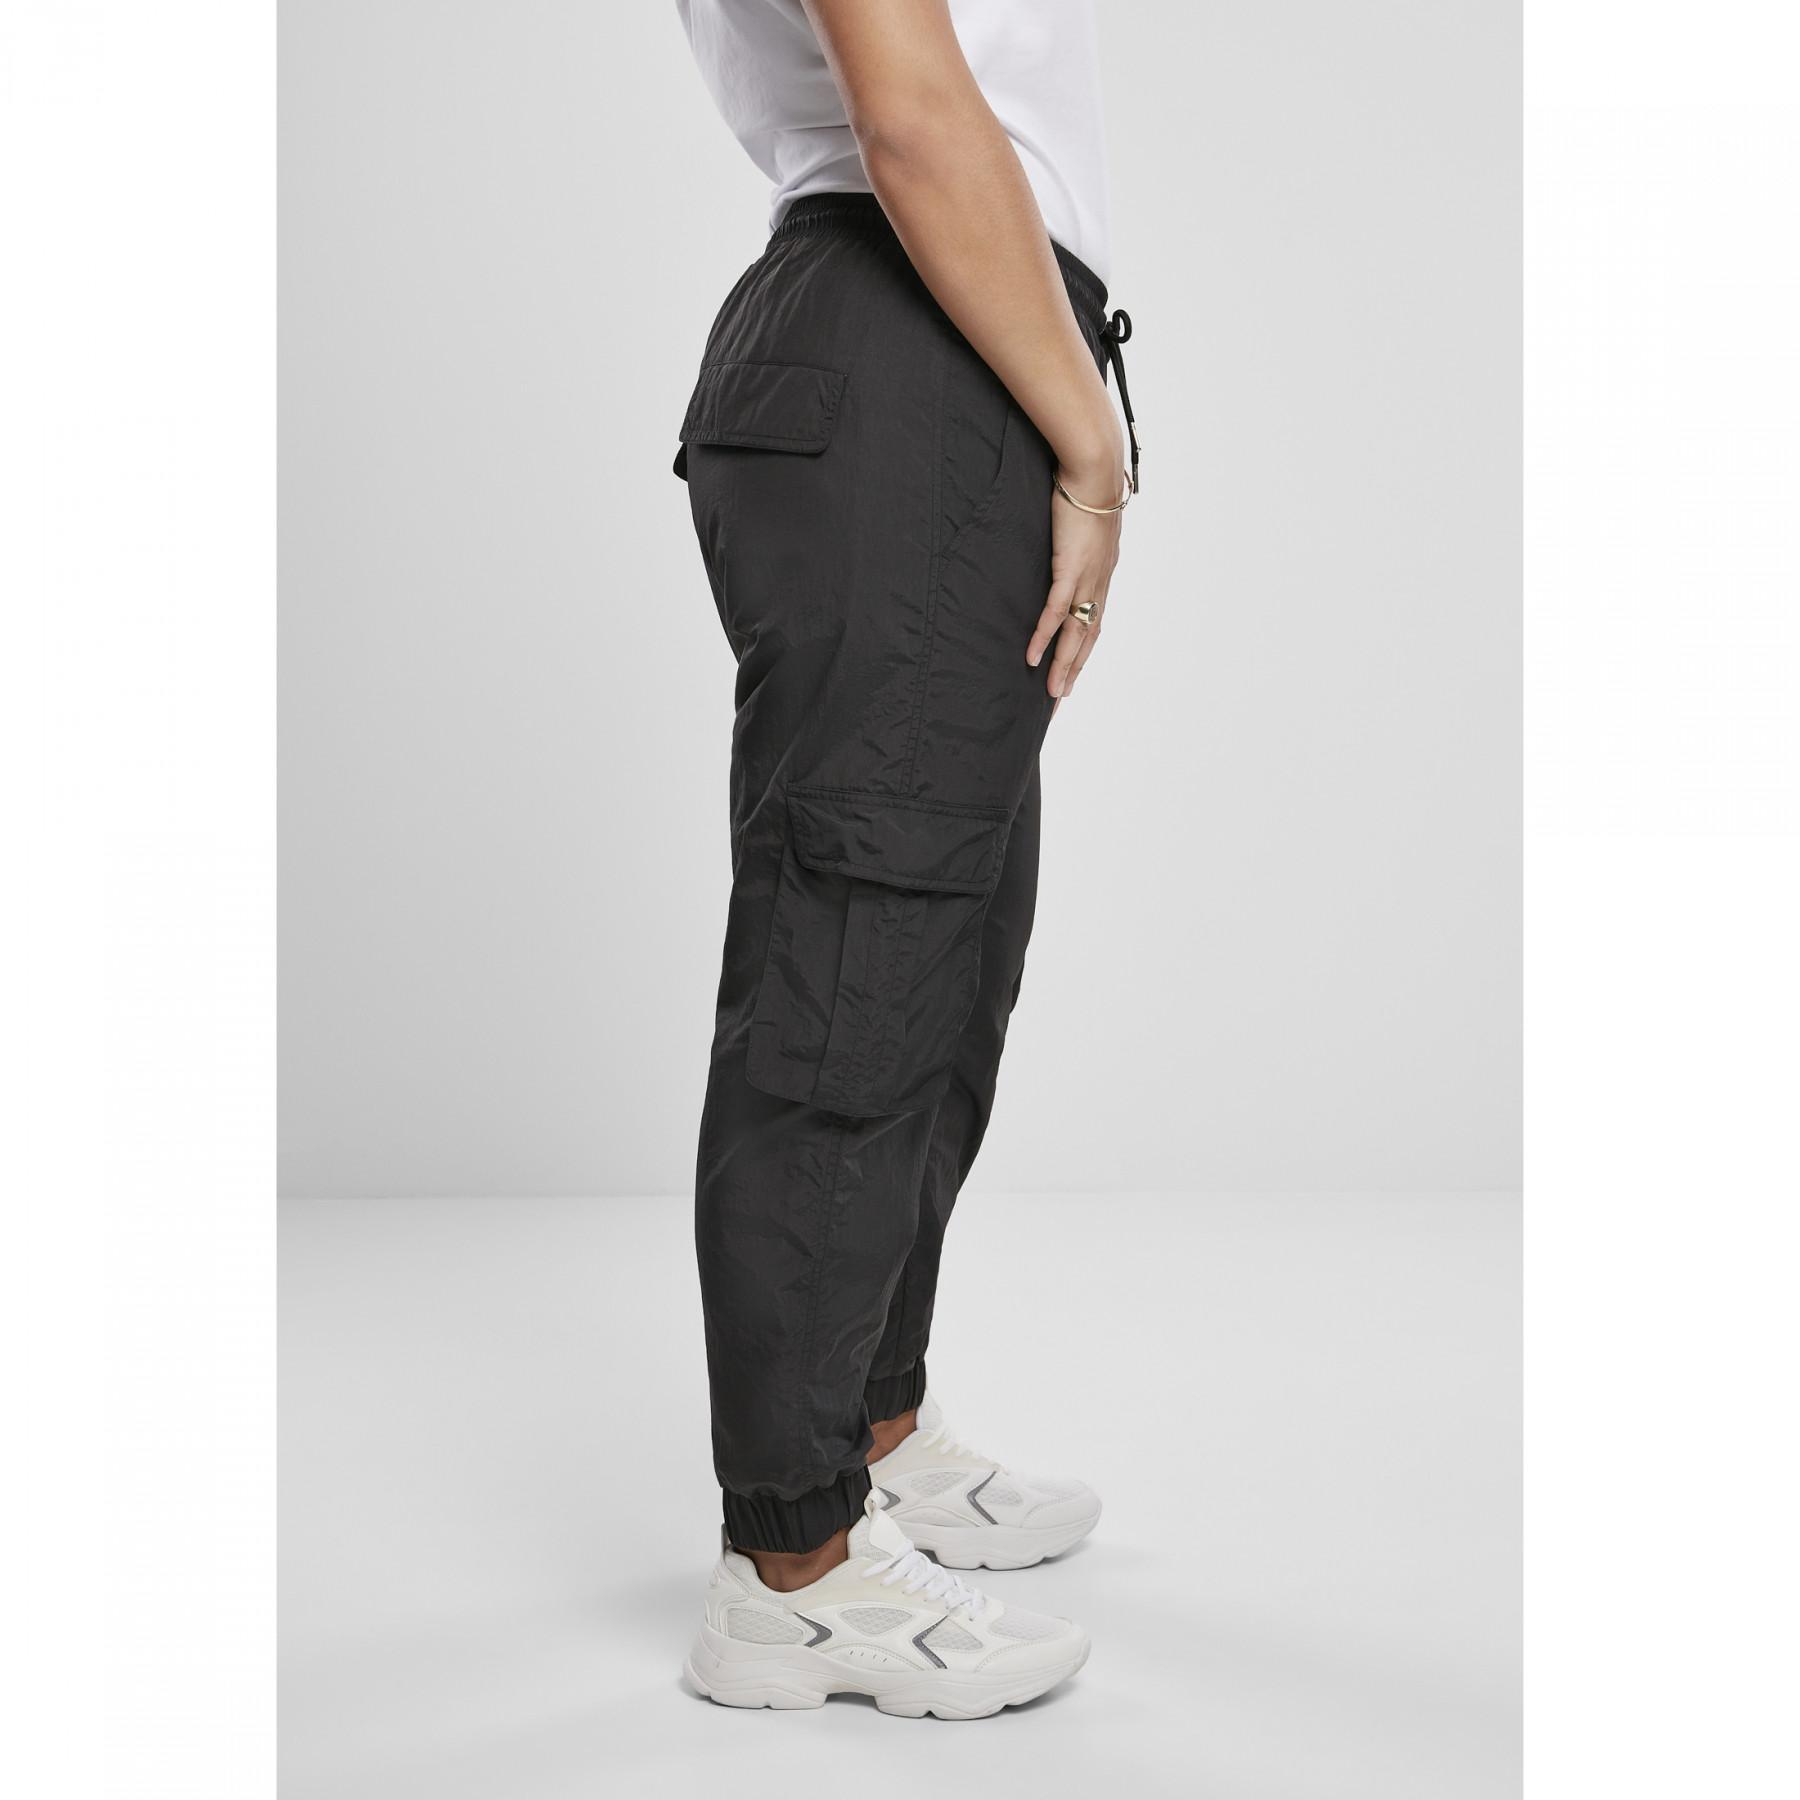 Pantalon femme Urban Classics high waist crinkle nylon cargo